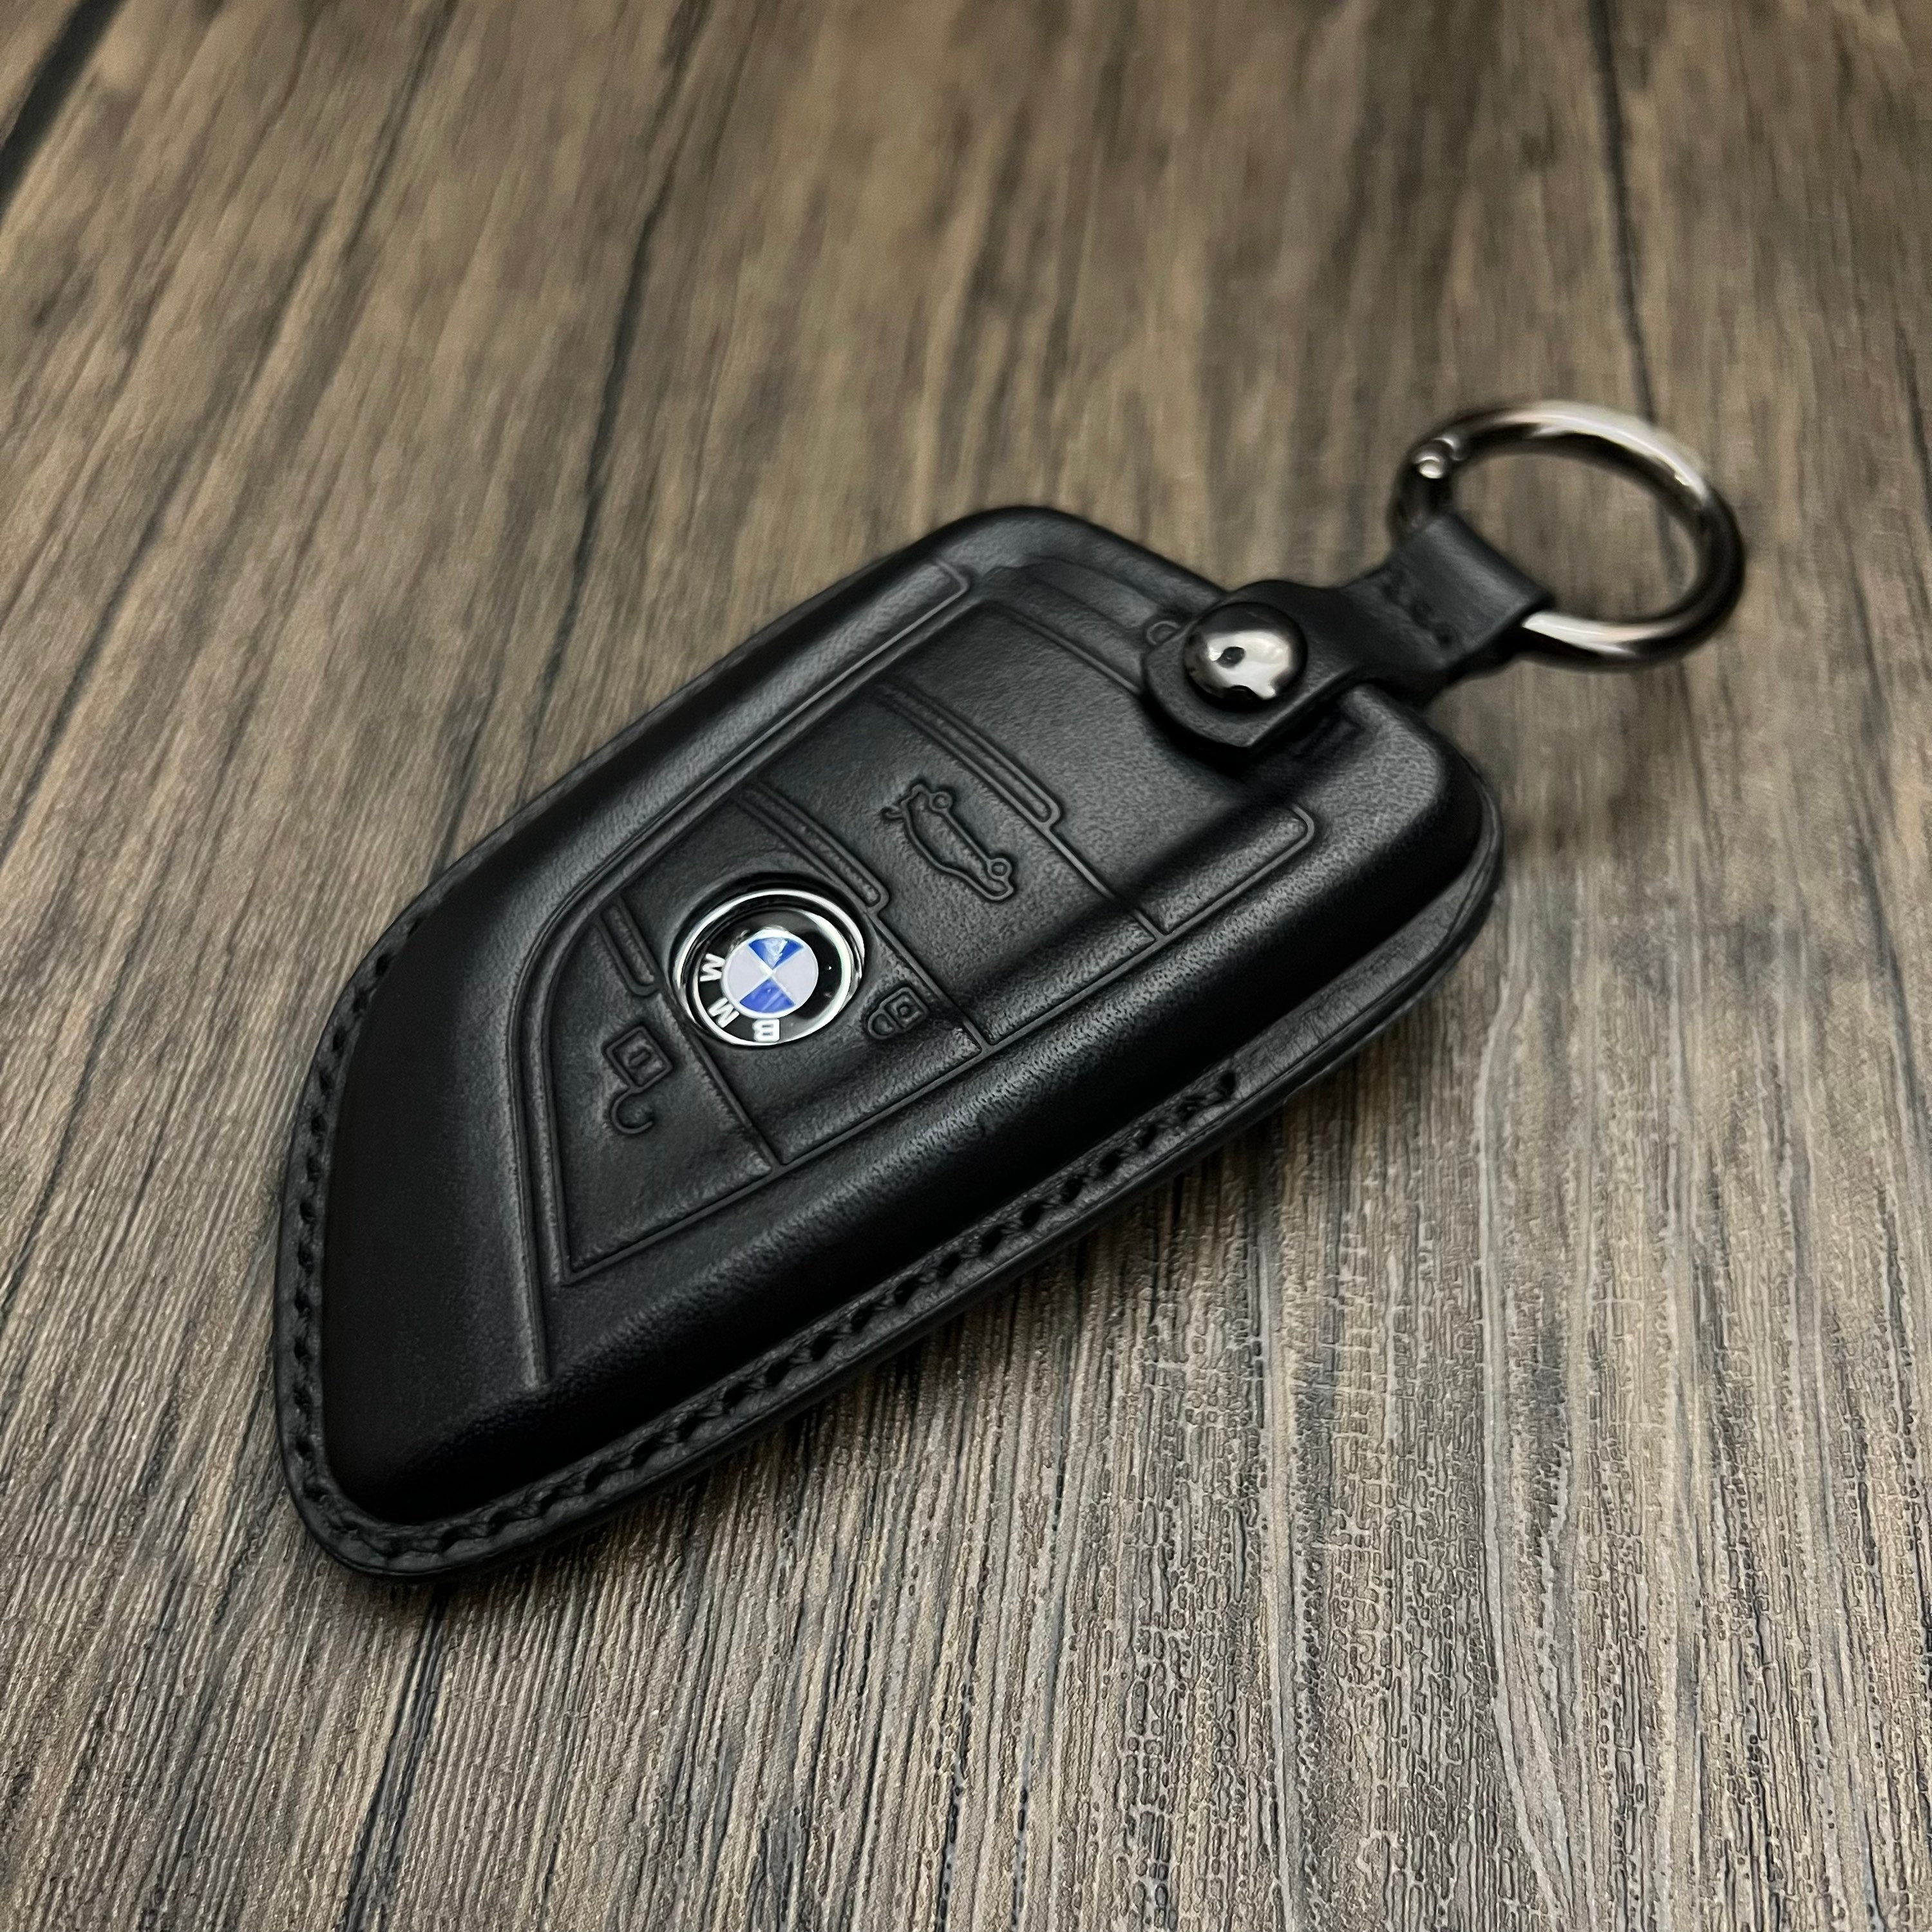 Premium Leather BMW Car Key Case – Carbon Velocity - Premium BMW